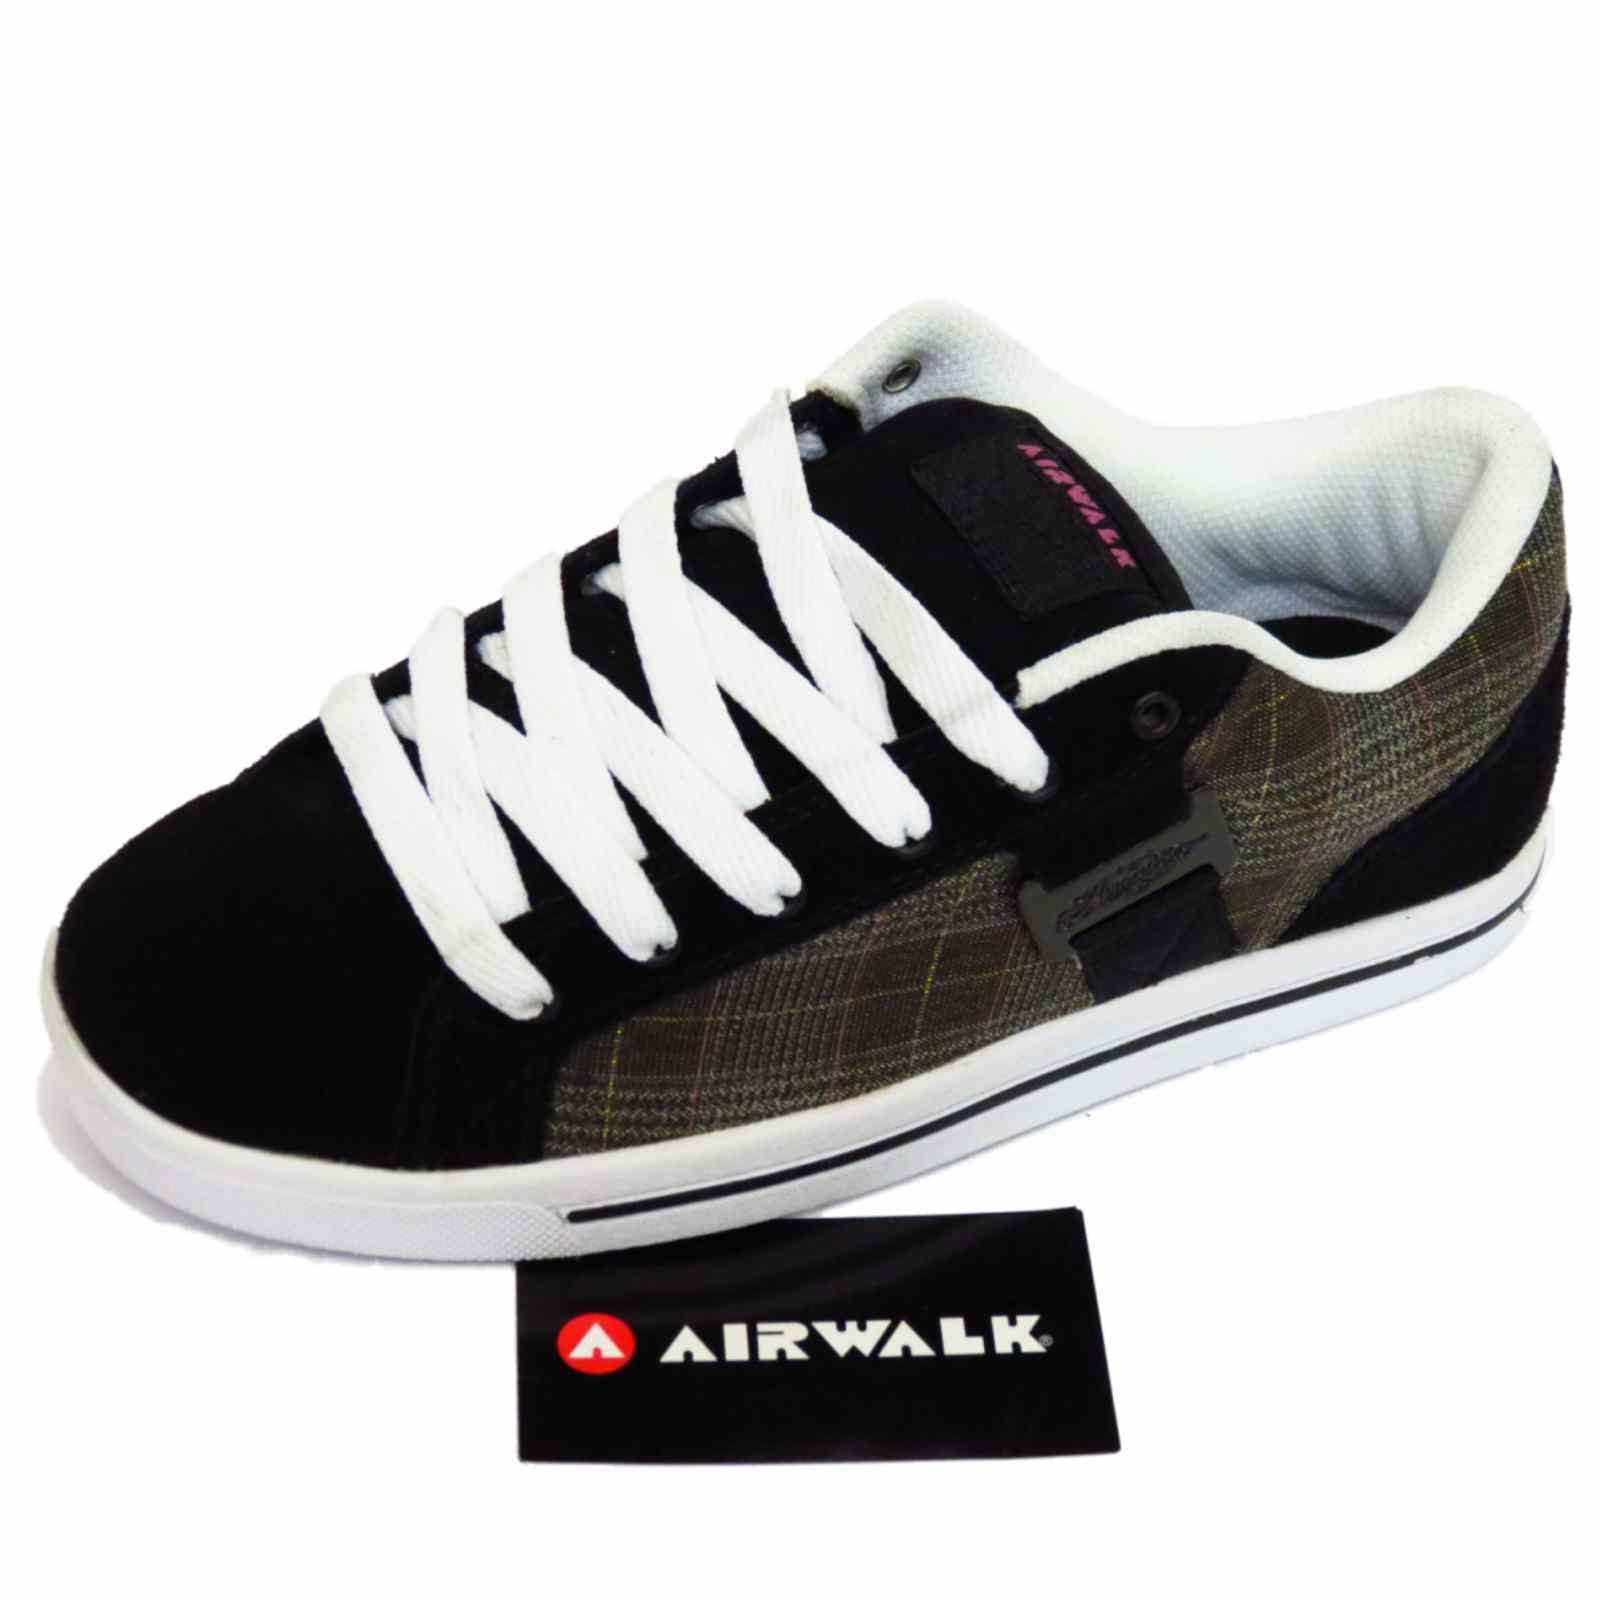 airwalk casual shoes